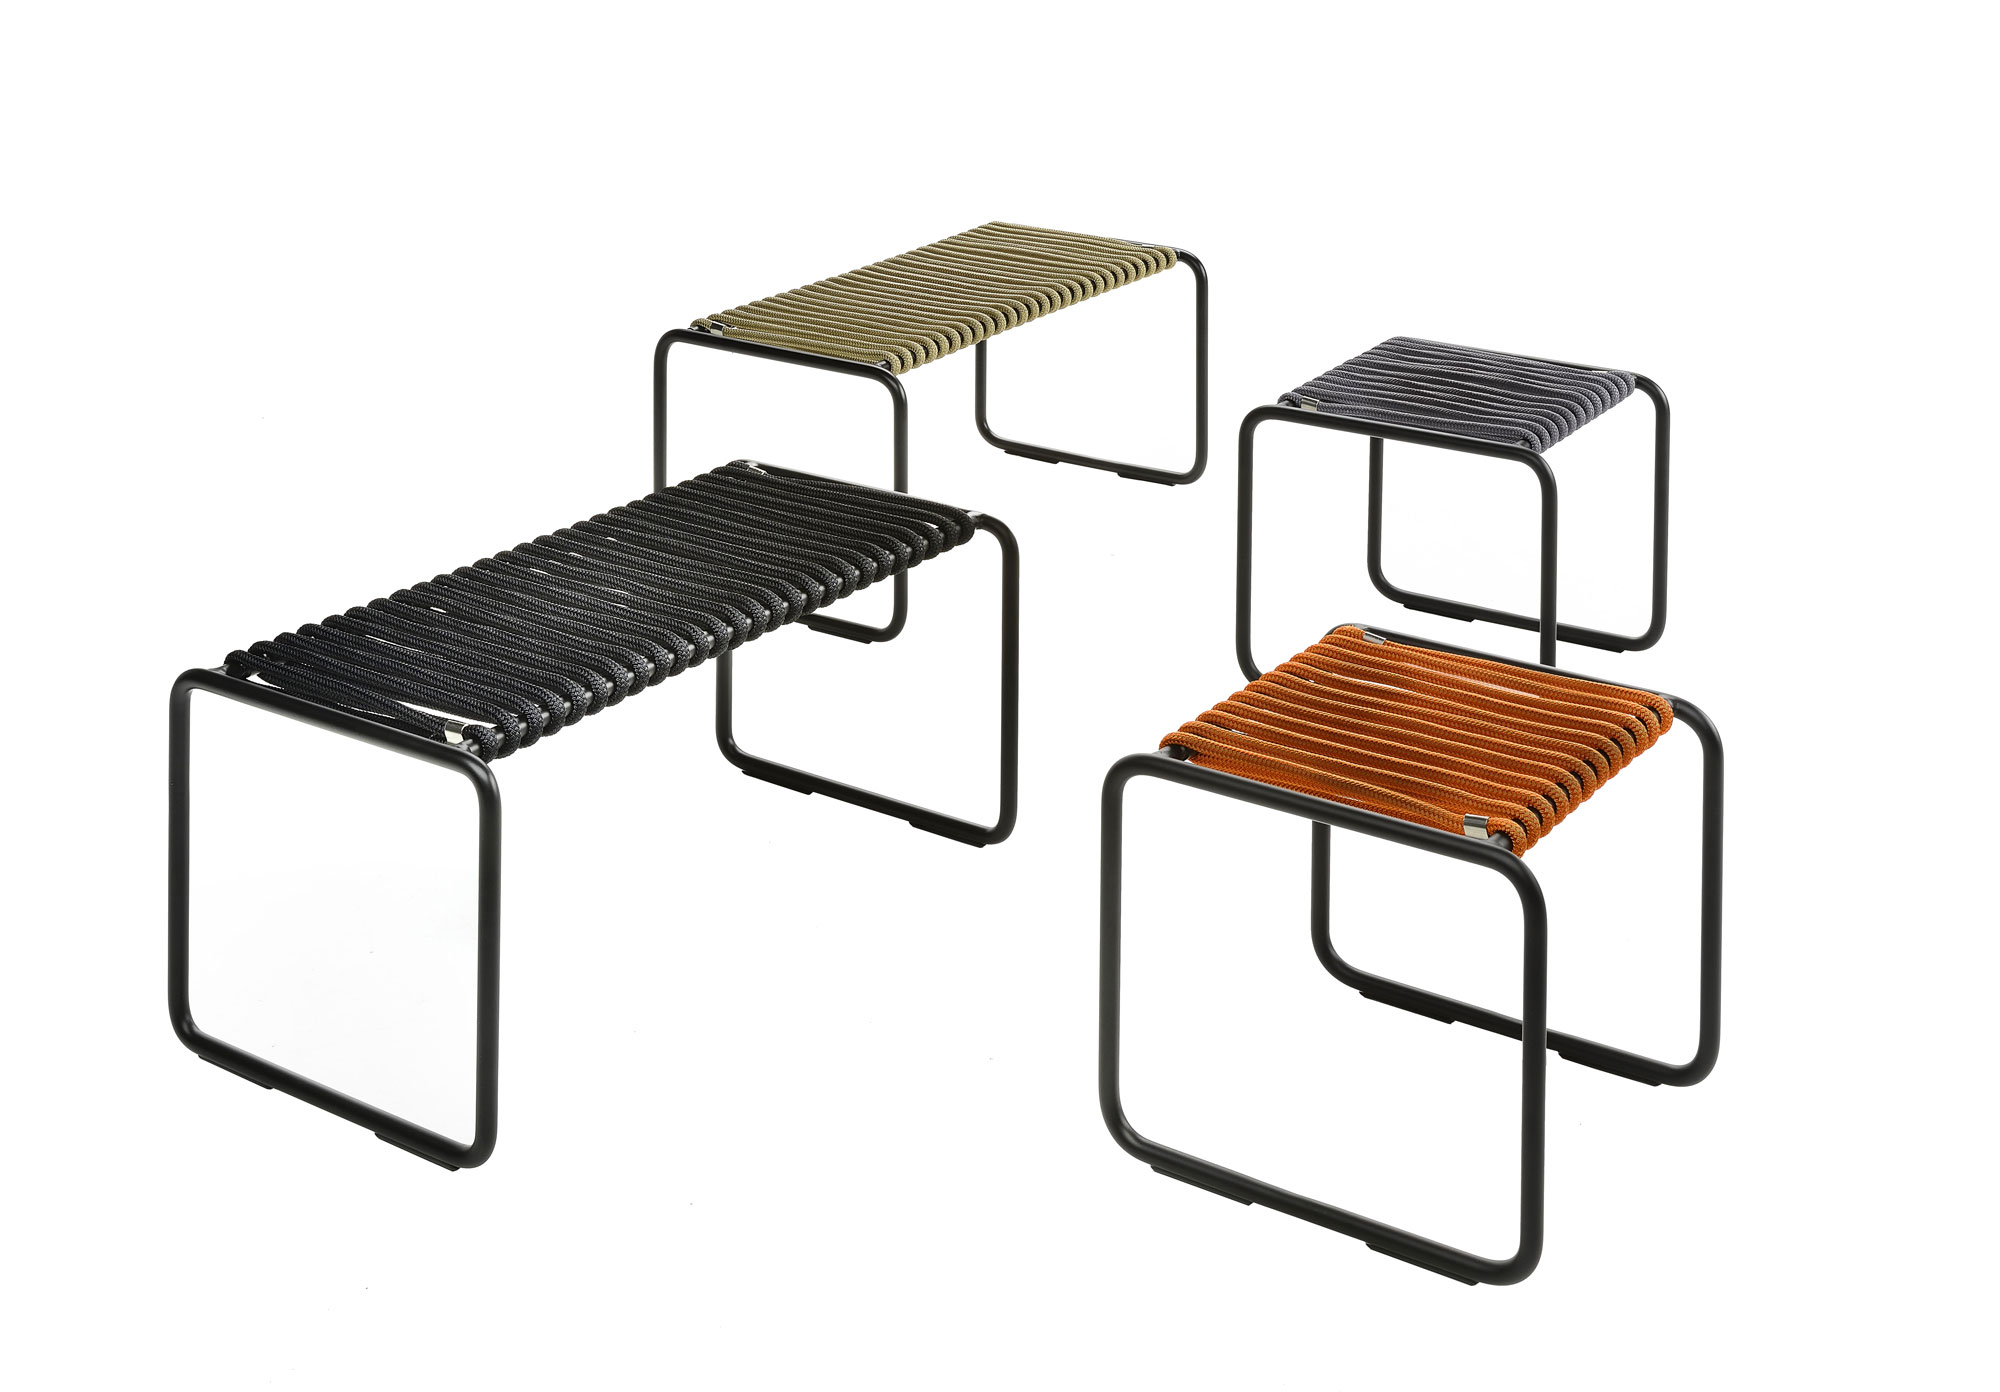 Low stools in nautical rope by Altek Italia Design